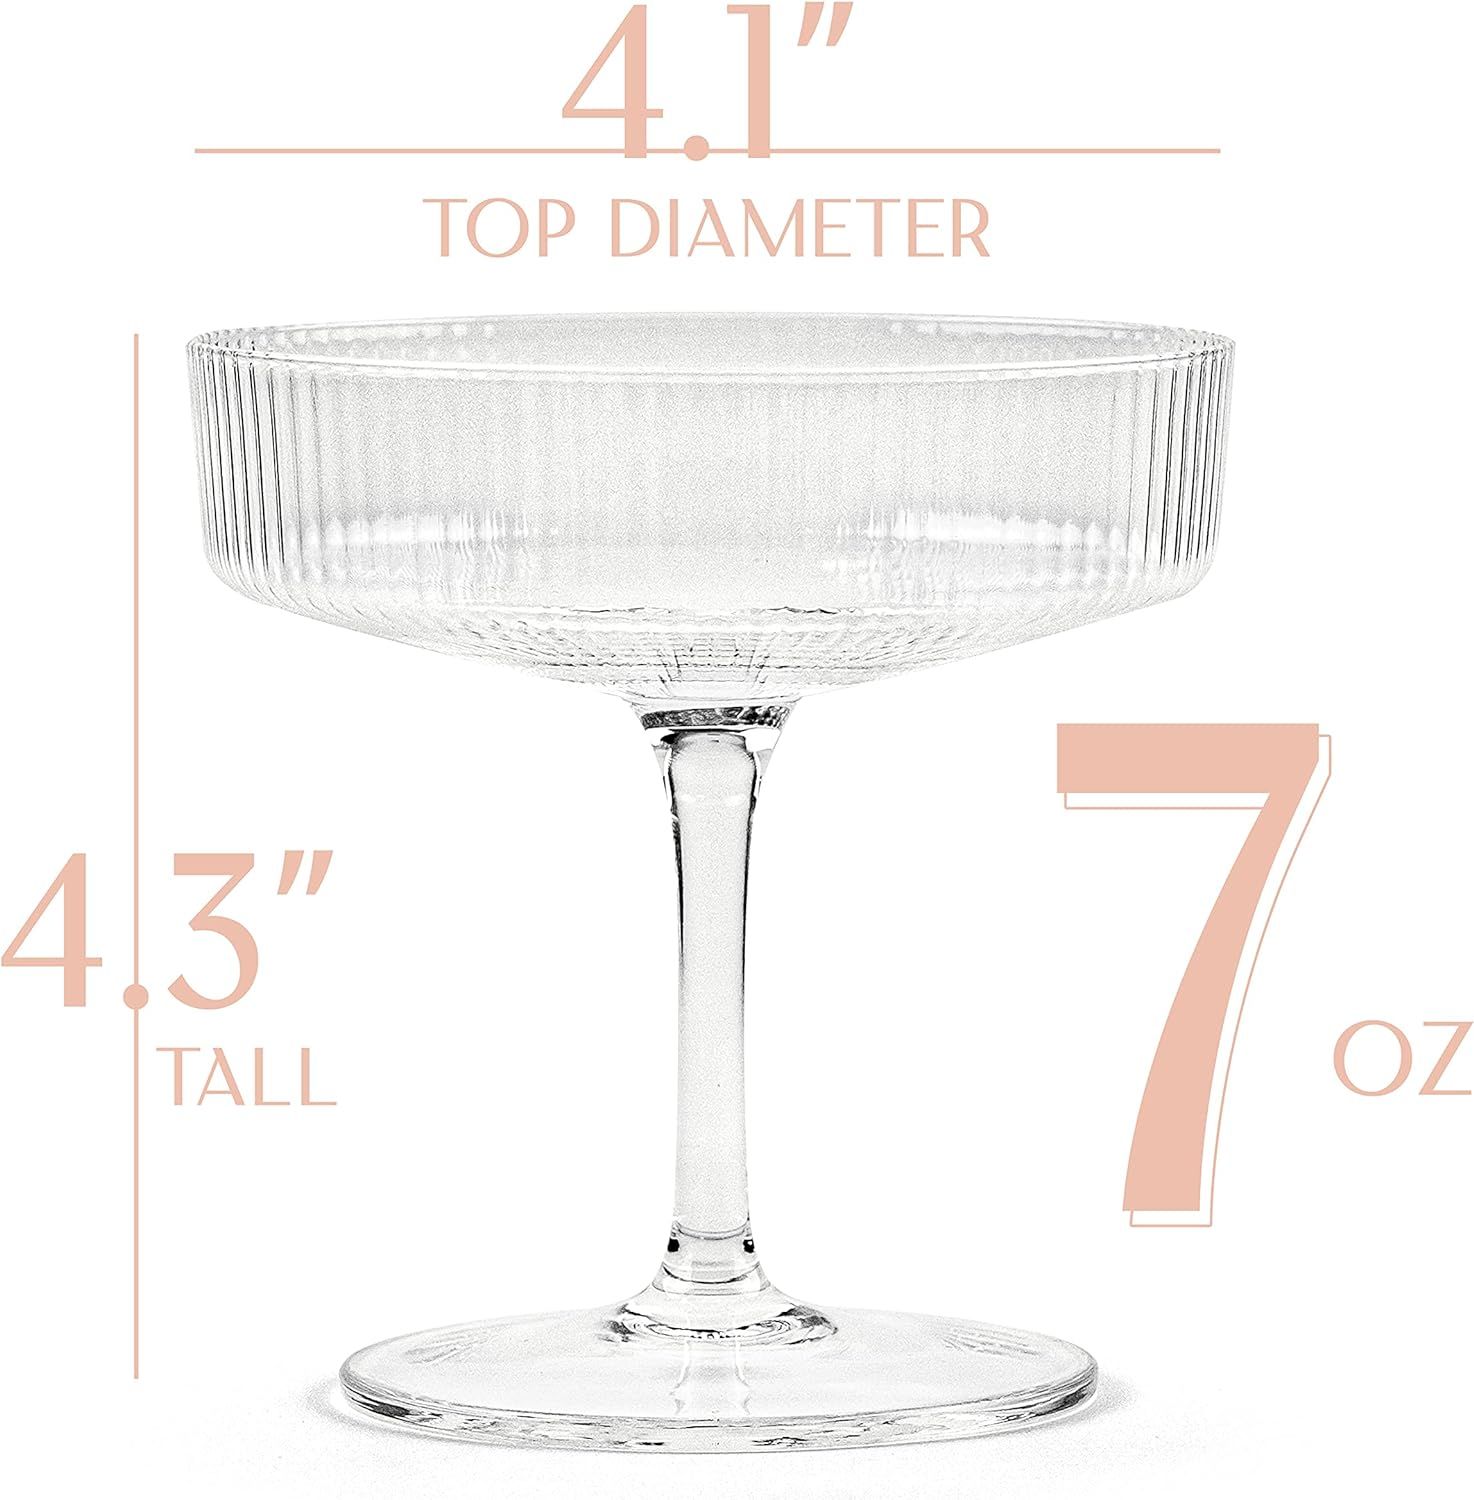 Vintage Art Deco Coupe Glasses | Set of 4 | 7 oz Classic Cocktail Glassware for Champagne, Martin... | Amazon (US)